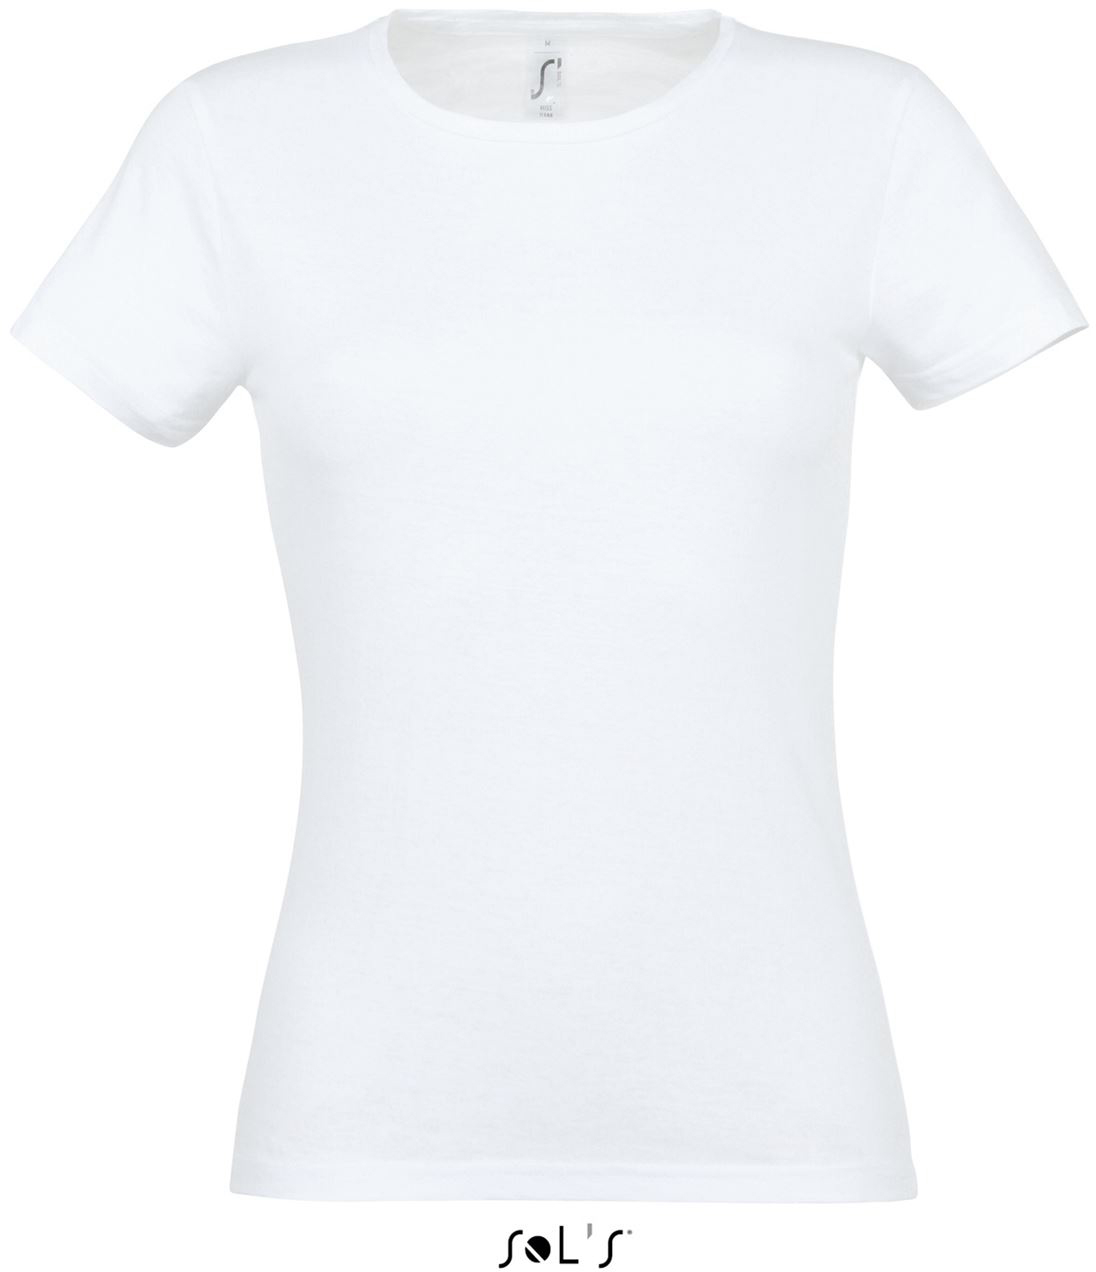 Sol's Miss - Women’s T-shirt - Sol's Miss - Women’s T-shirt - White